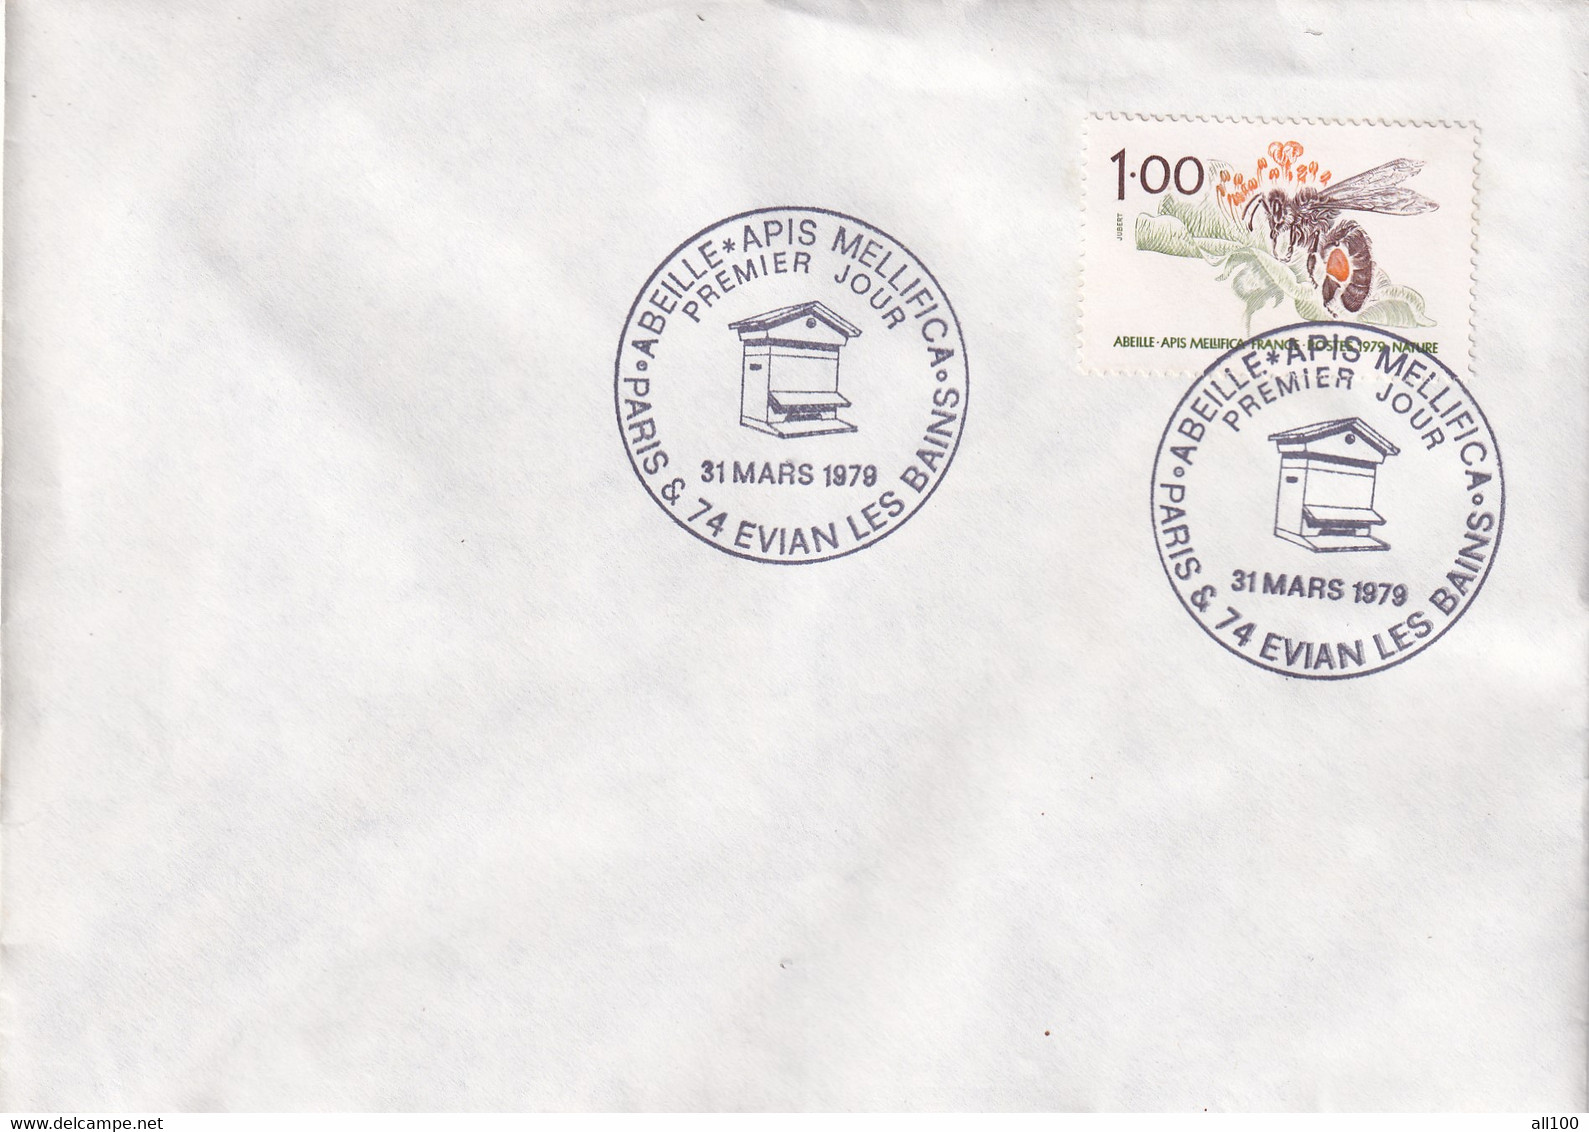 A21888 - Abeille Apis Mellifica Paris Evian Les Bains Cover Envelope Unused 1979 Stamp Republique Francaise Honeybee Bee - Honeybees